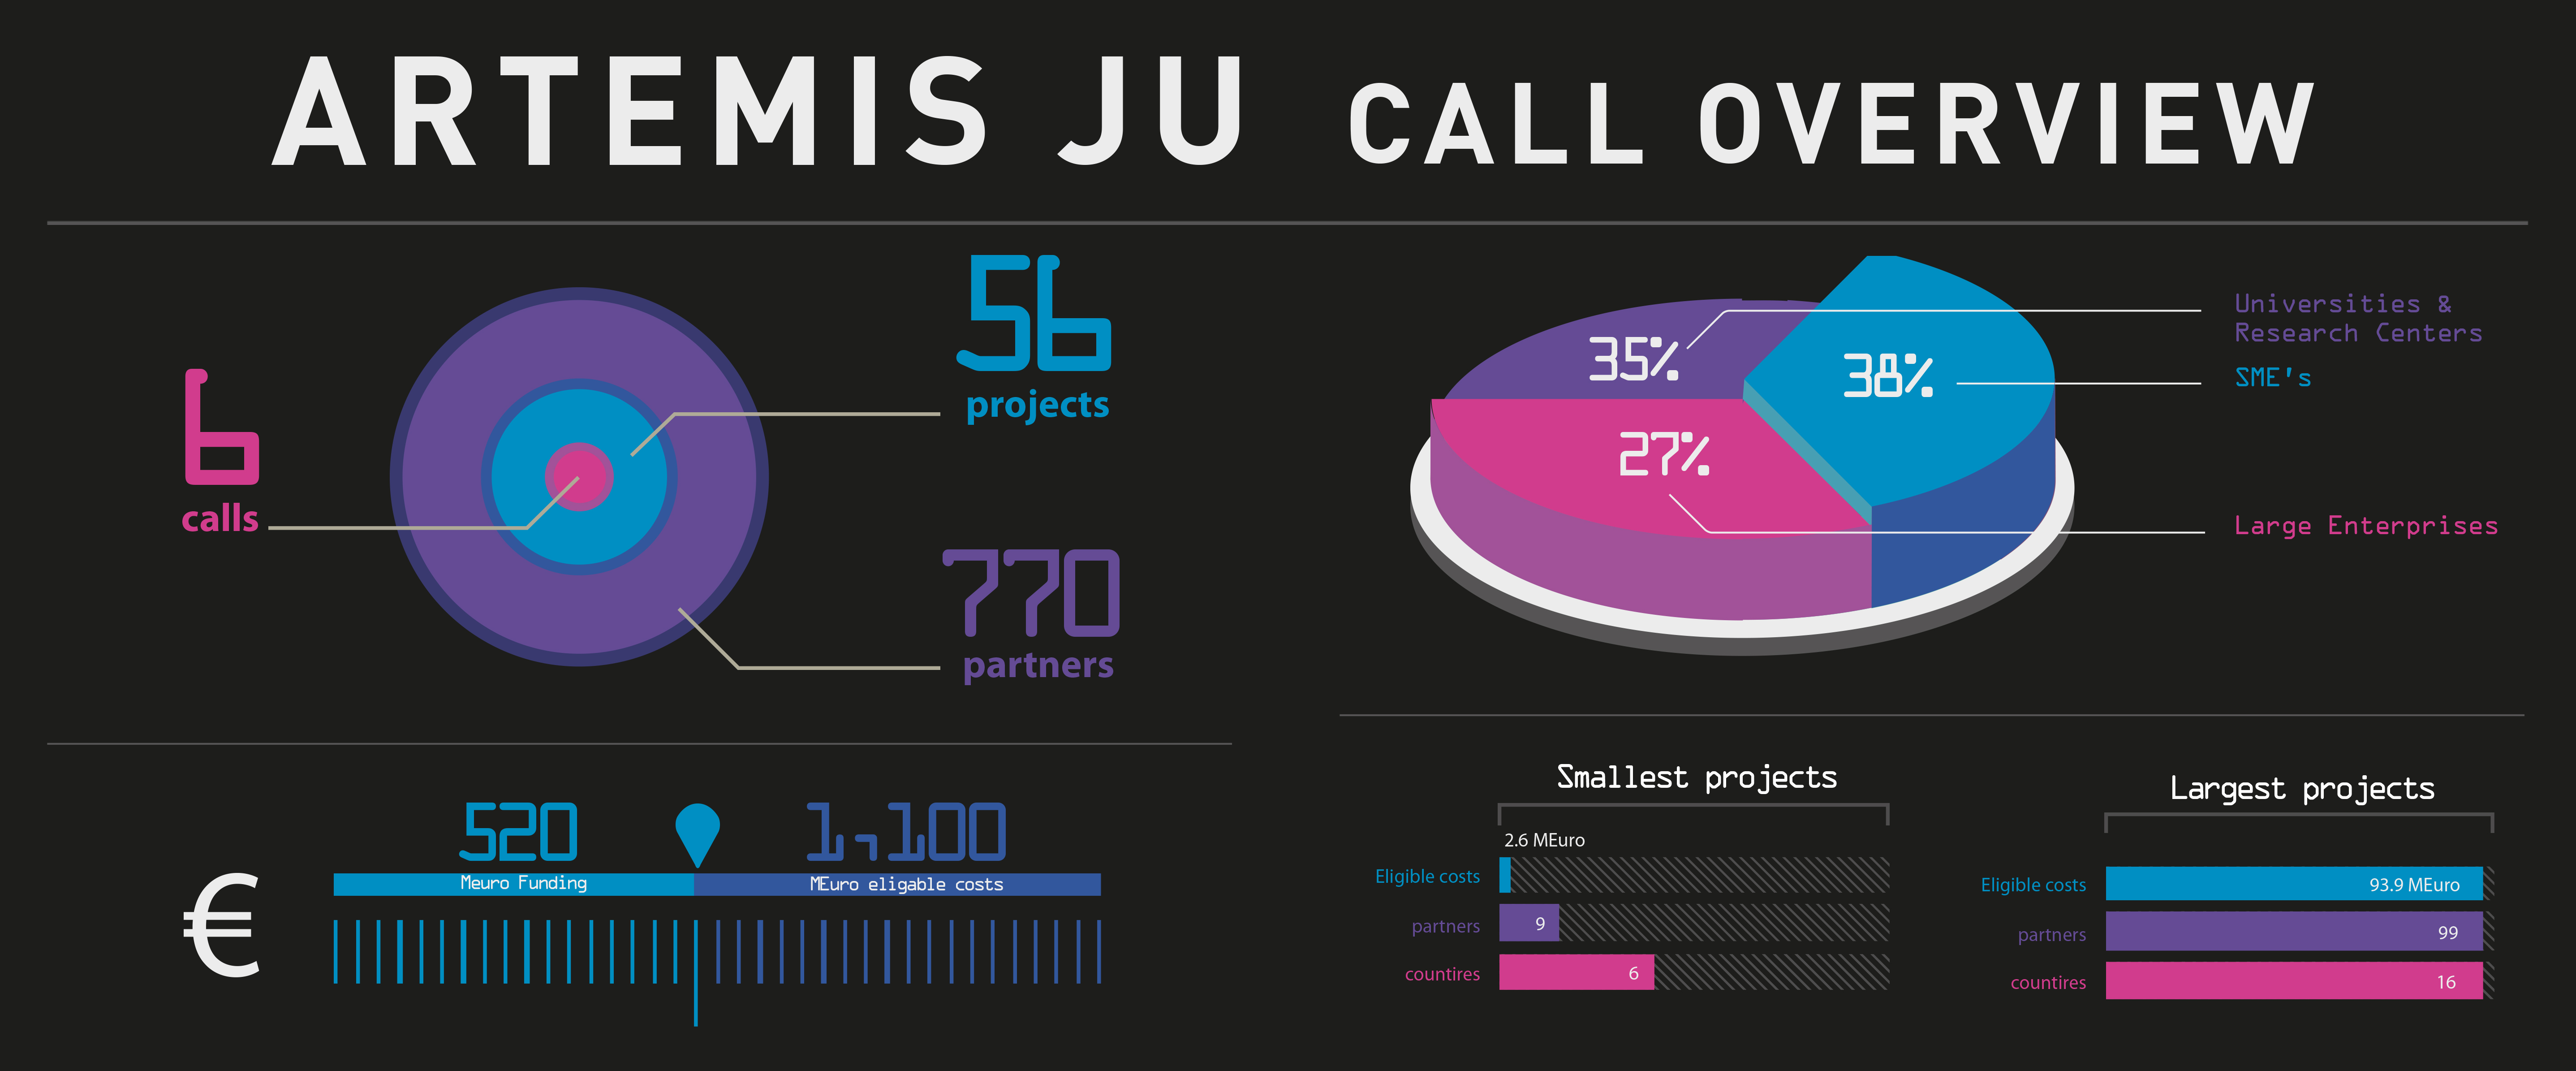 ARTEMIS-JU Results